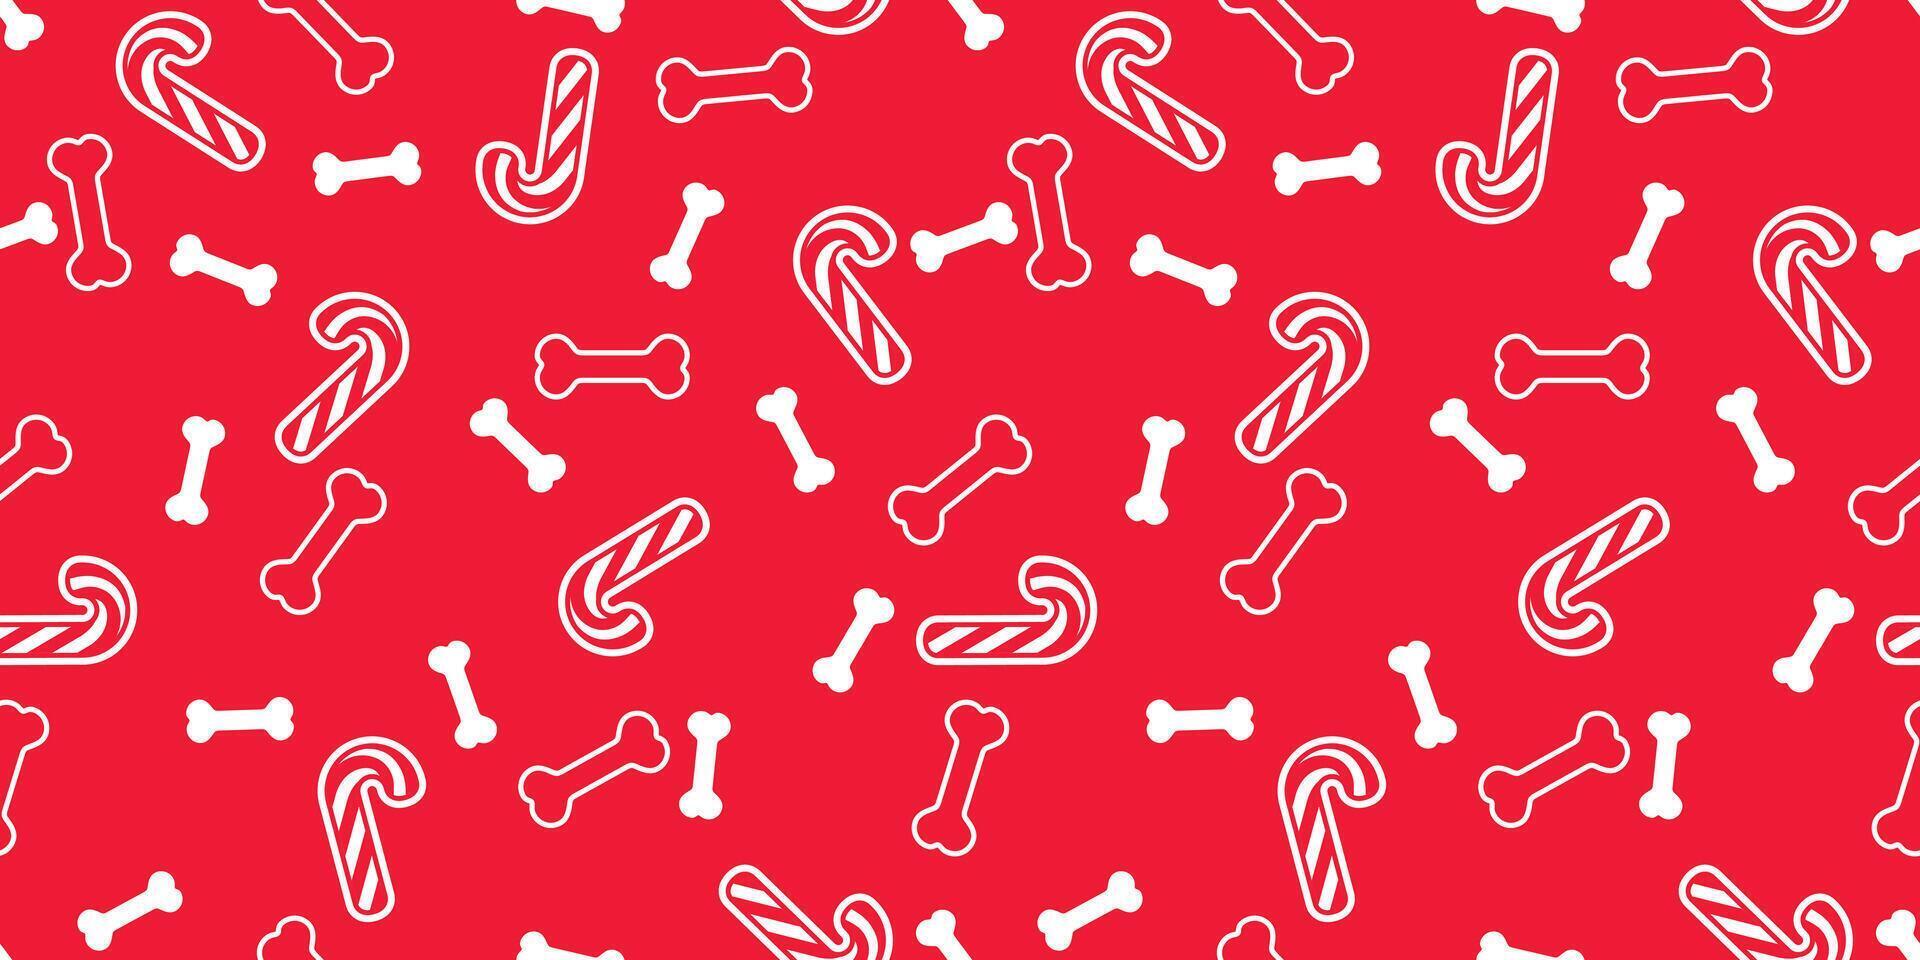 hond bot naadloos patroon Kerstmis snoep riet Frans bulldog puppy huisdier voetafdruk tekenfilm herhaling behang tegel achtergrond sjaal geïsoleerd illustratie tekening ontwerp vector